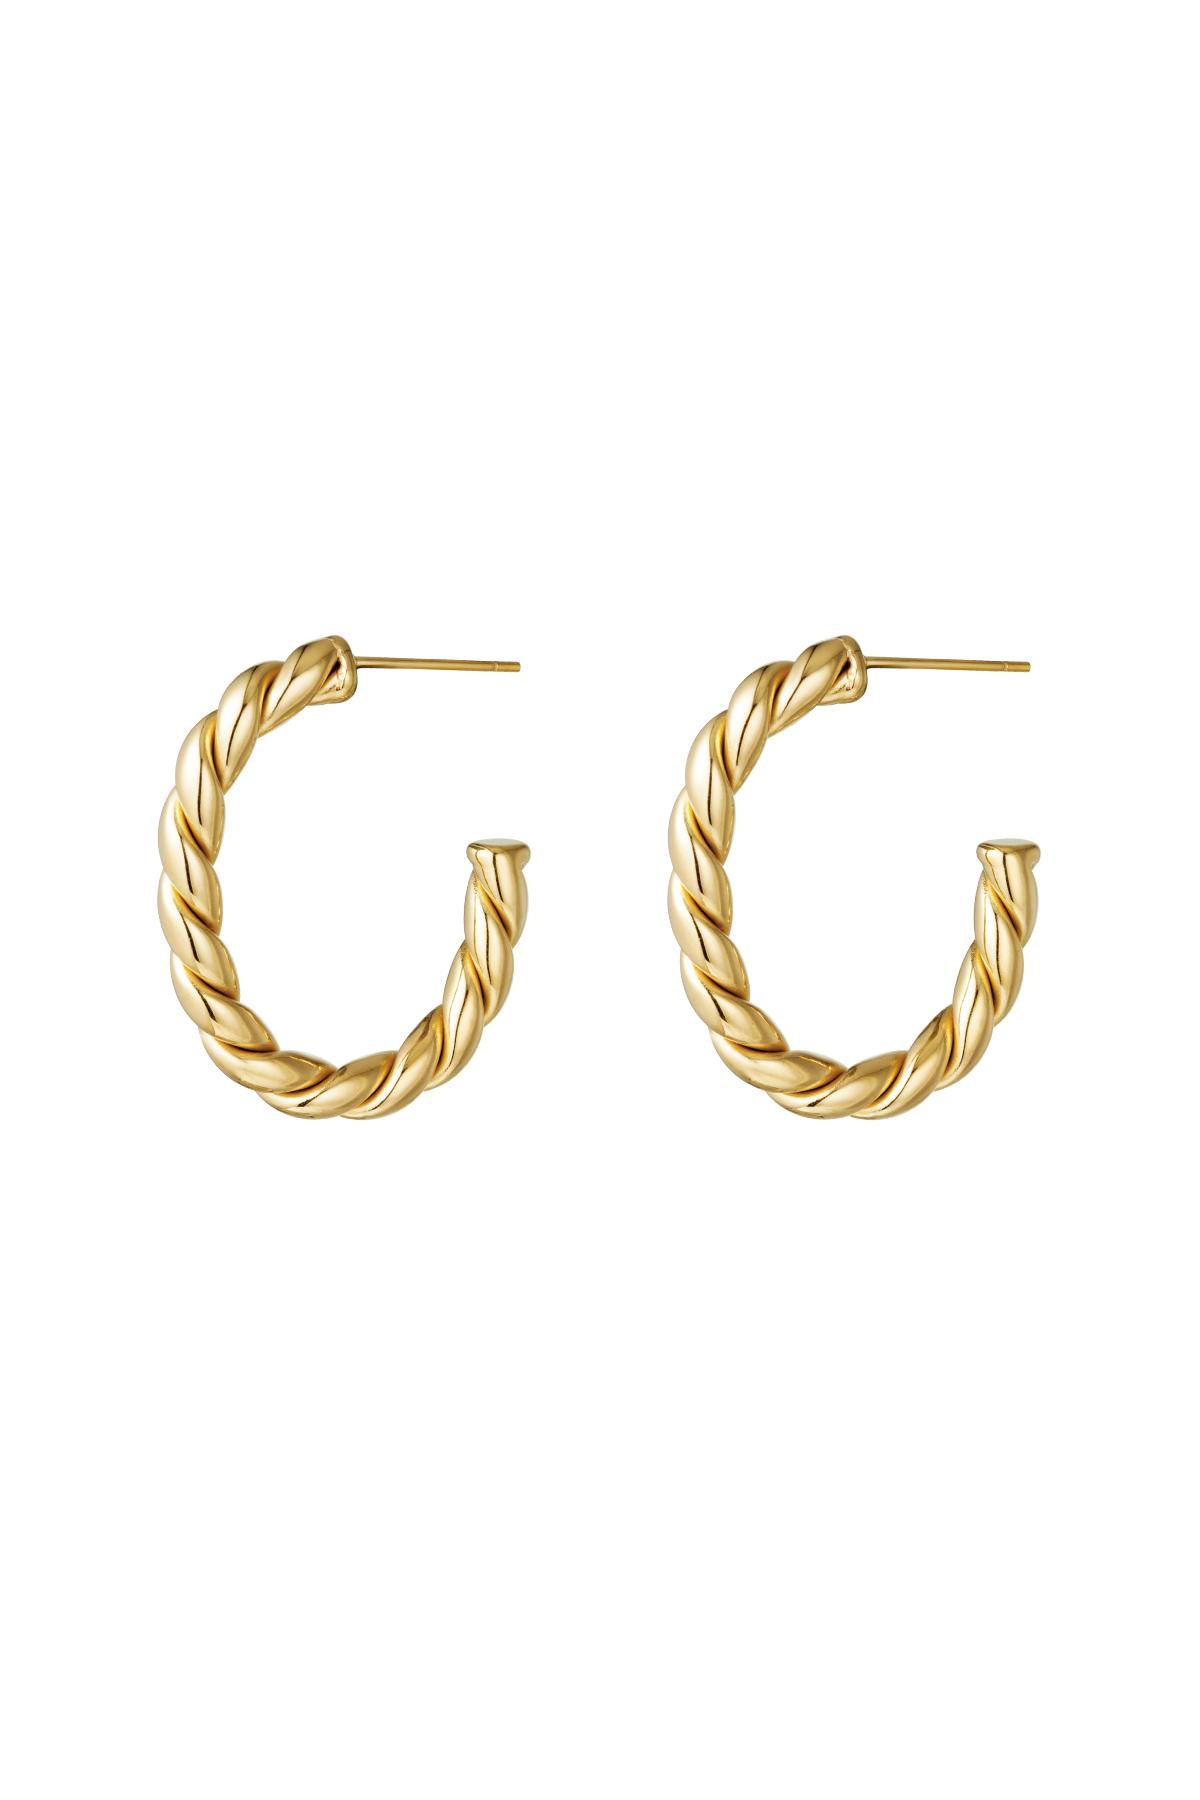 Gold / Earrings Hoops Rope Gold Stainless Steel 